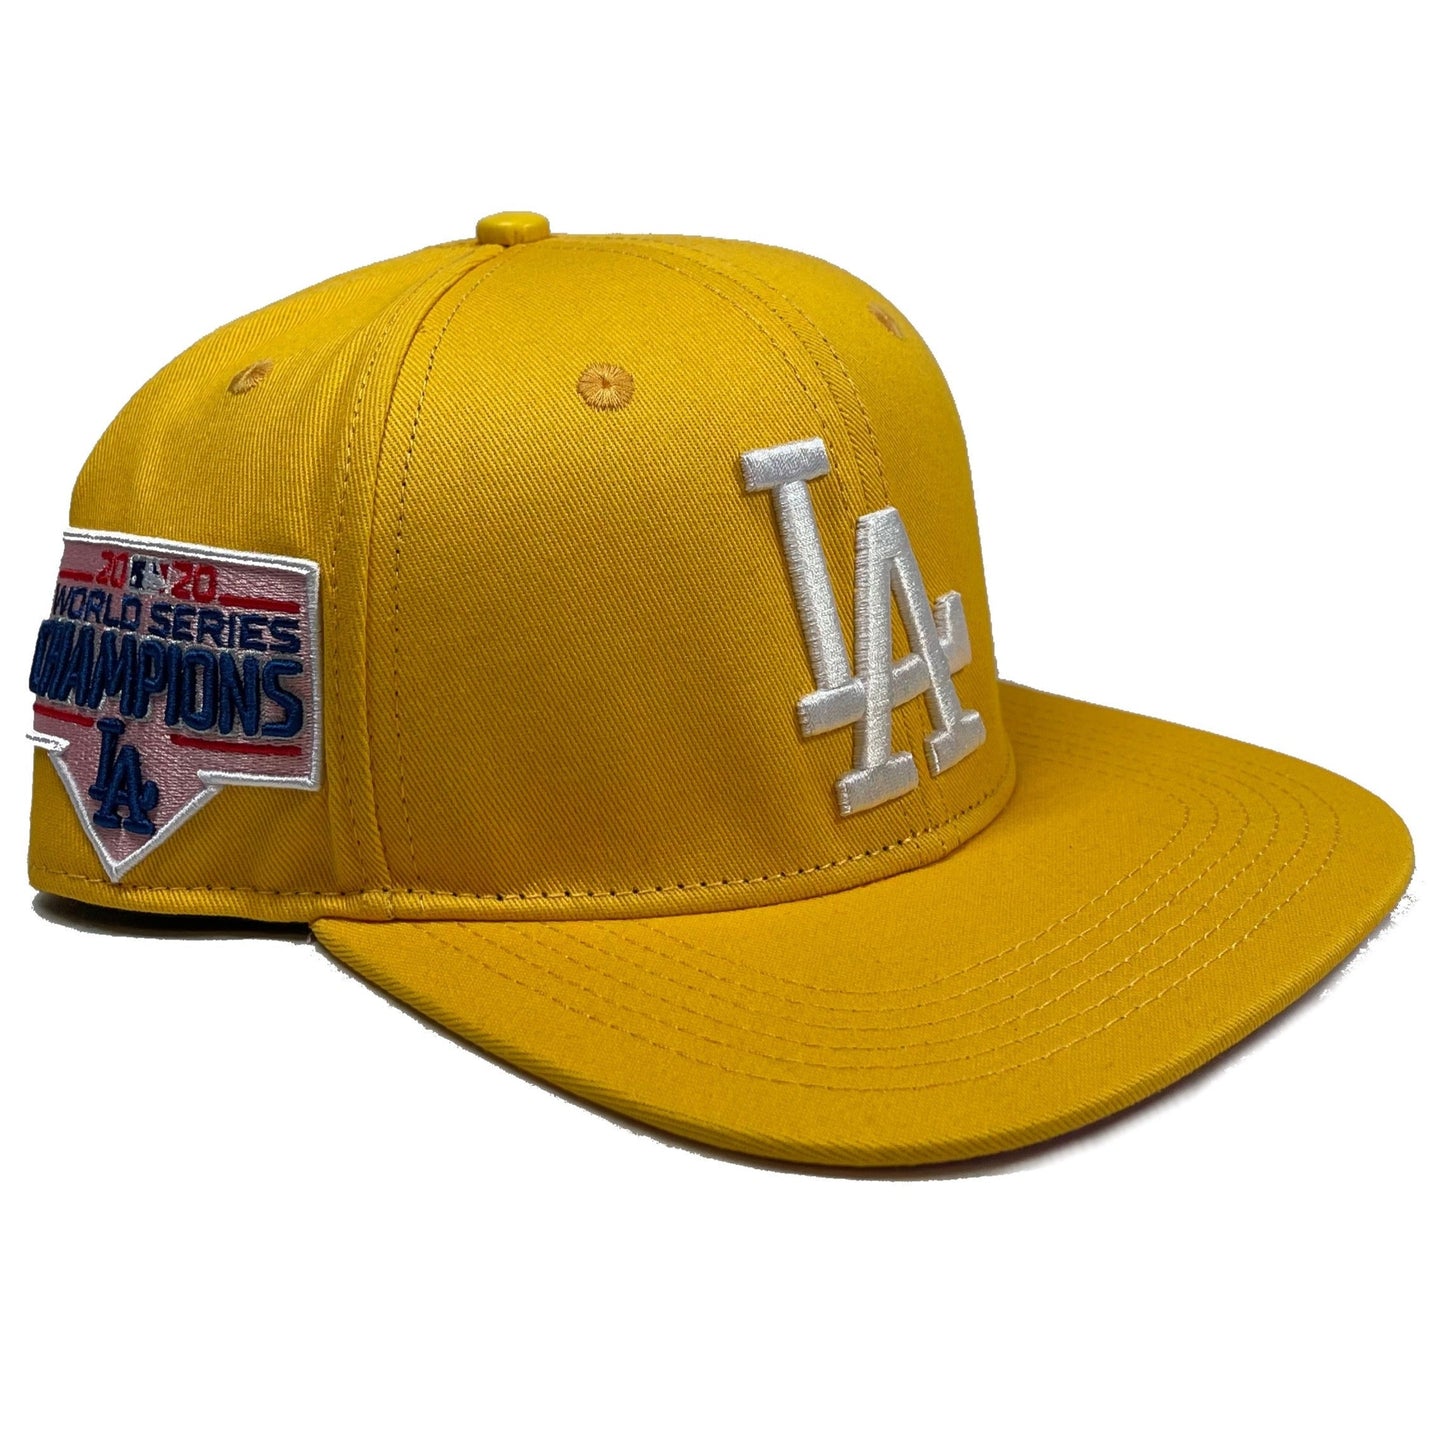 Los Angeles Dodgers 2020 World Series (Yellow) Snapback